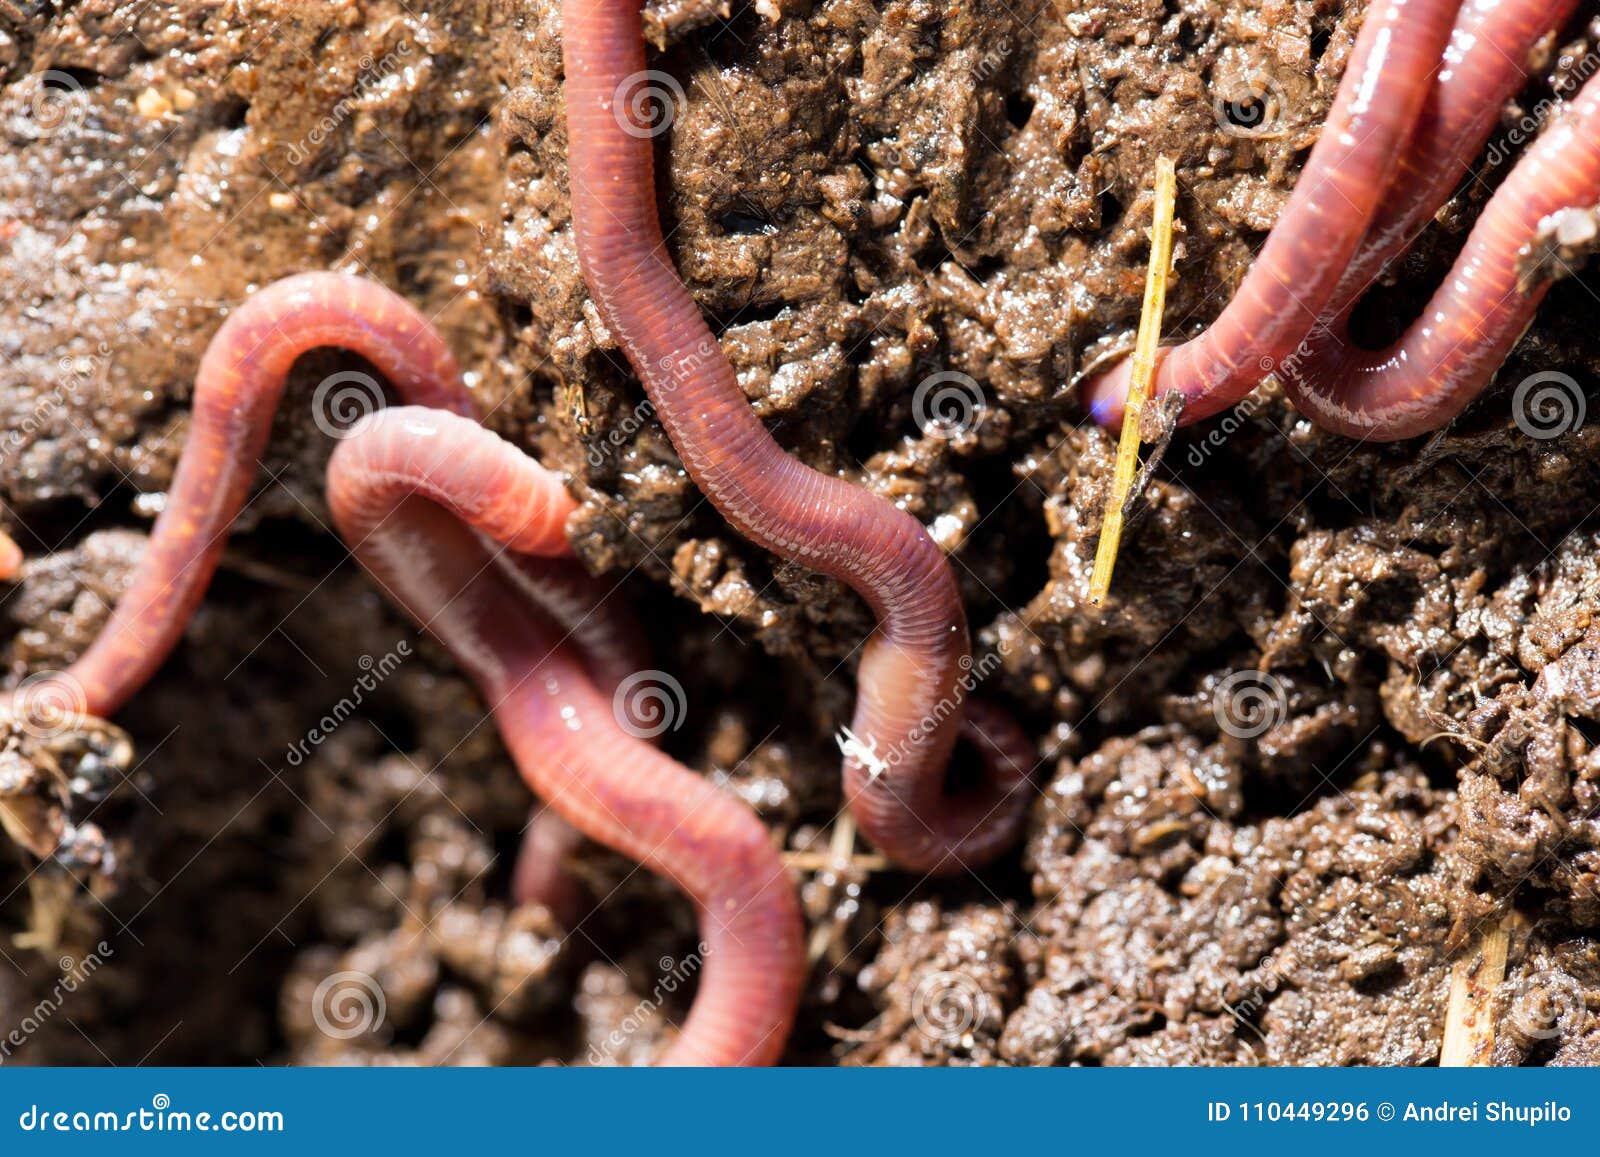 395 Worms Dendrobena Stock Photos - Free & Royalty-Free Stock Photos from  Dreamstime